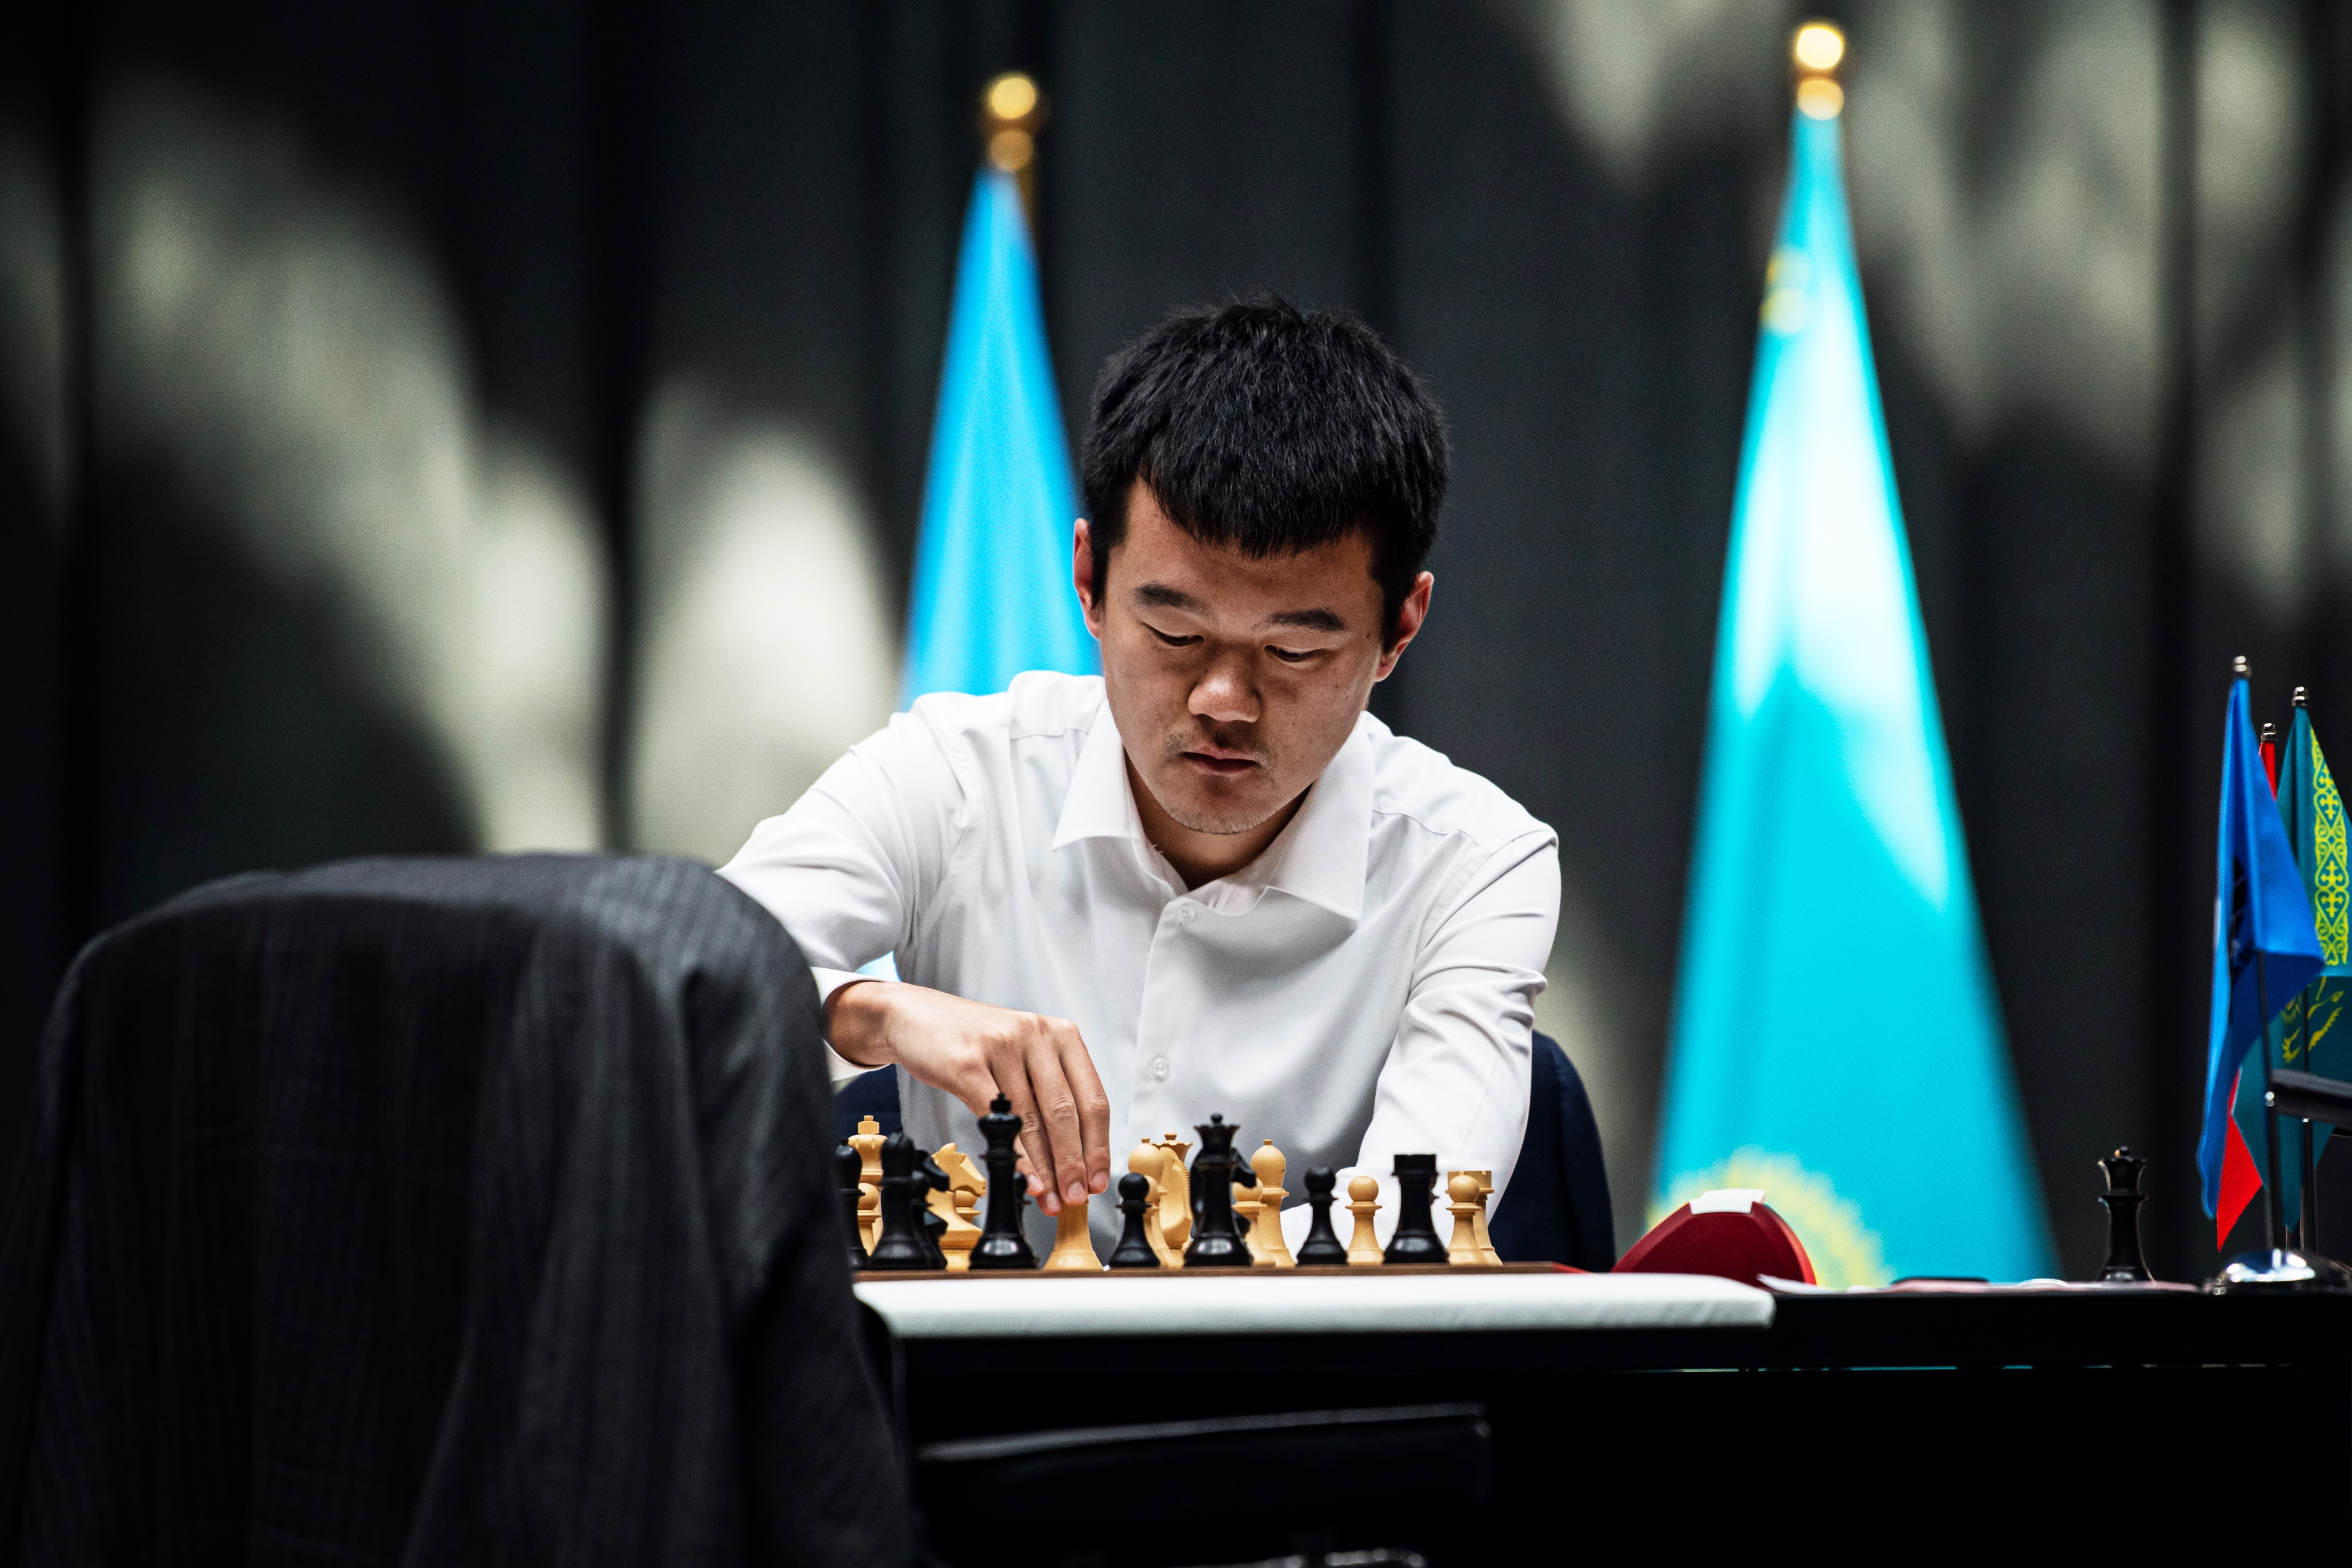 International Chess Federation on X: Ding Liren, the strongest